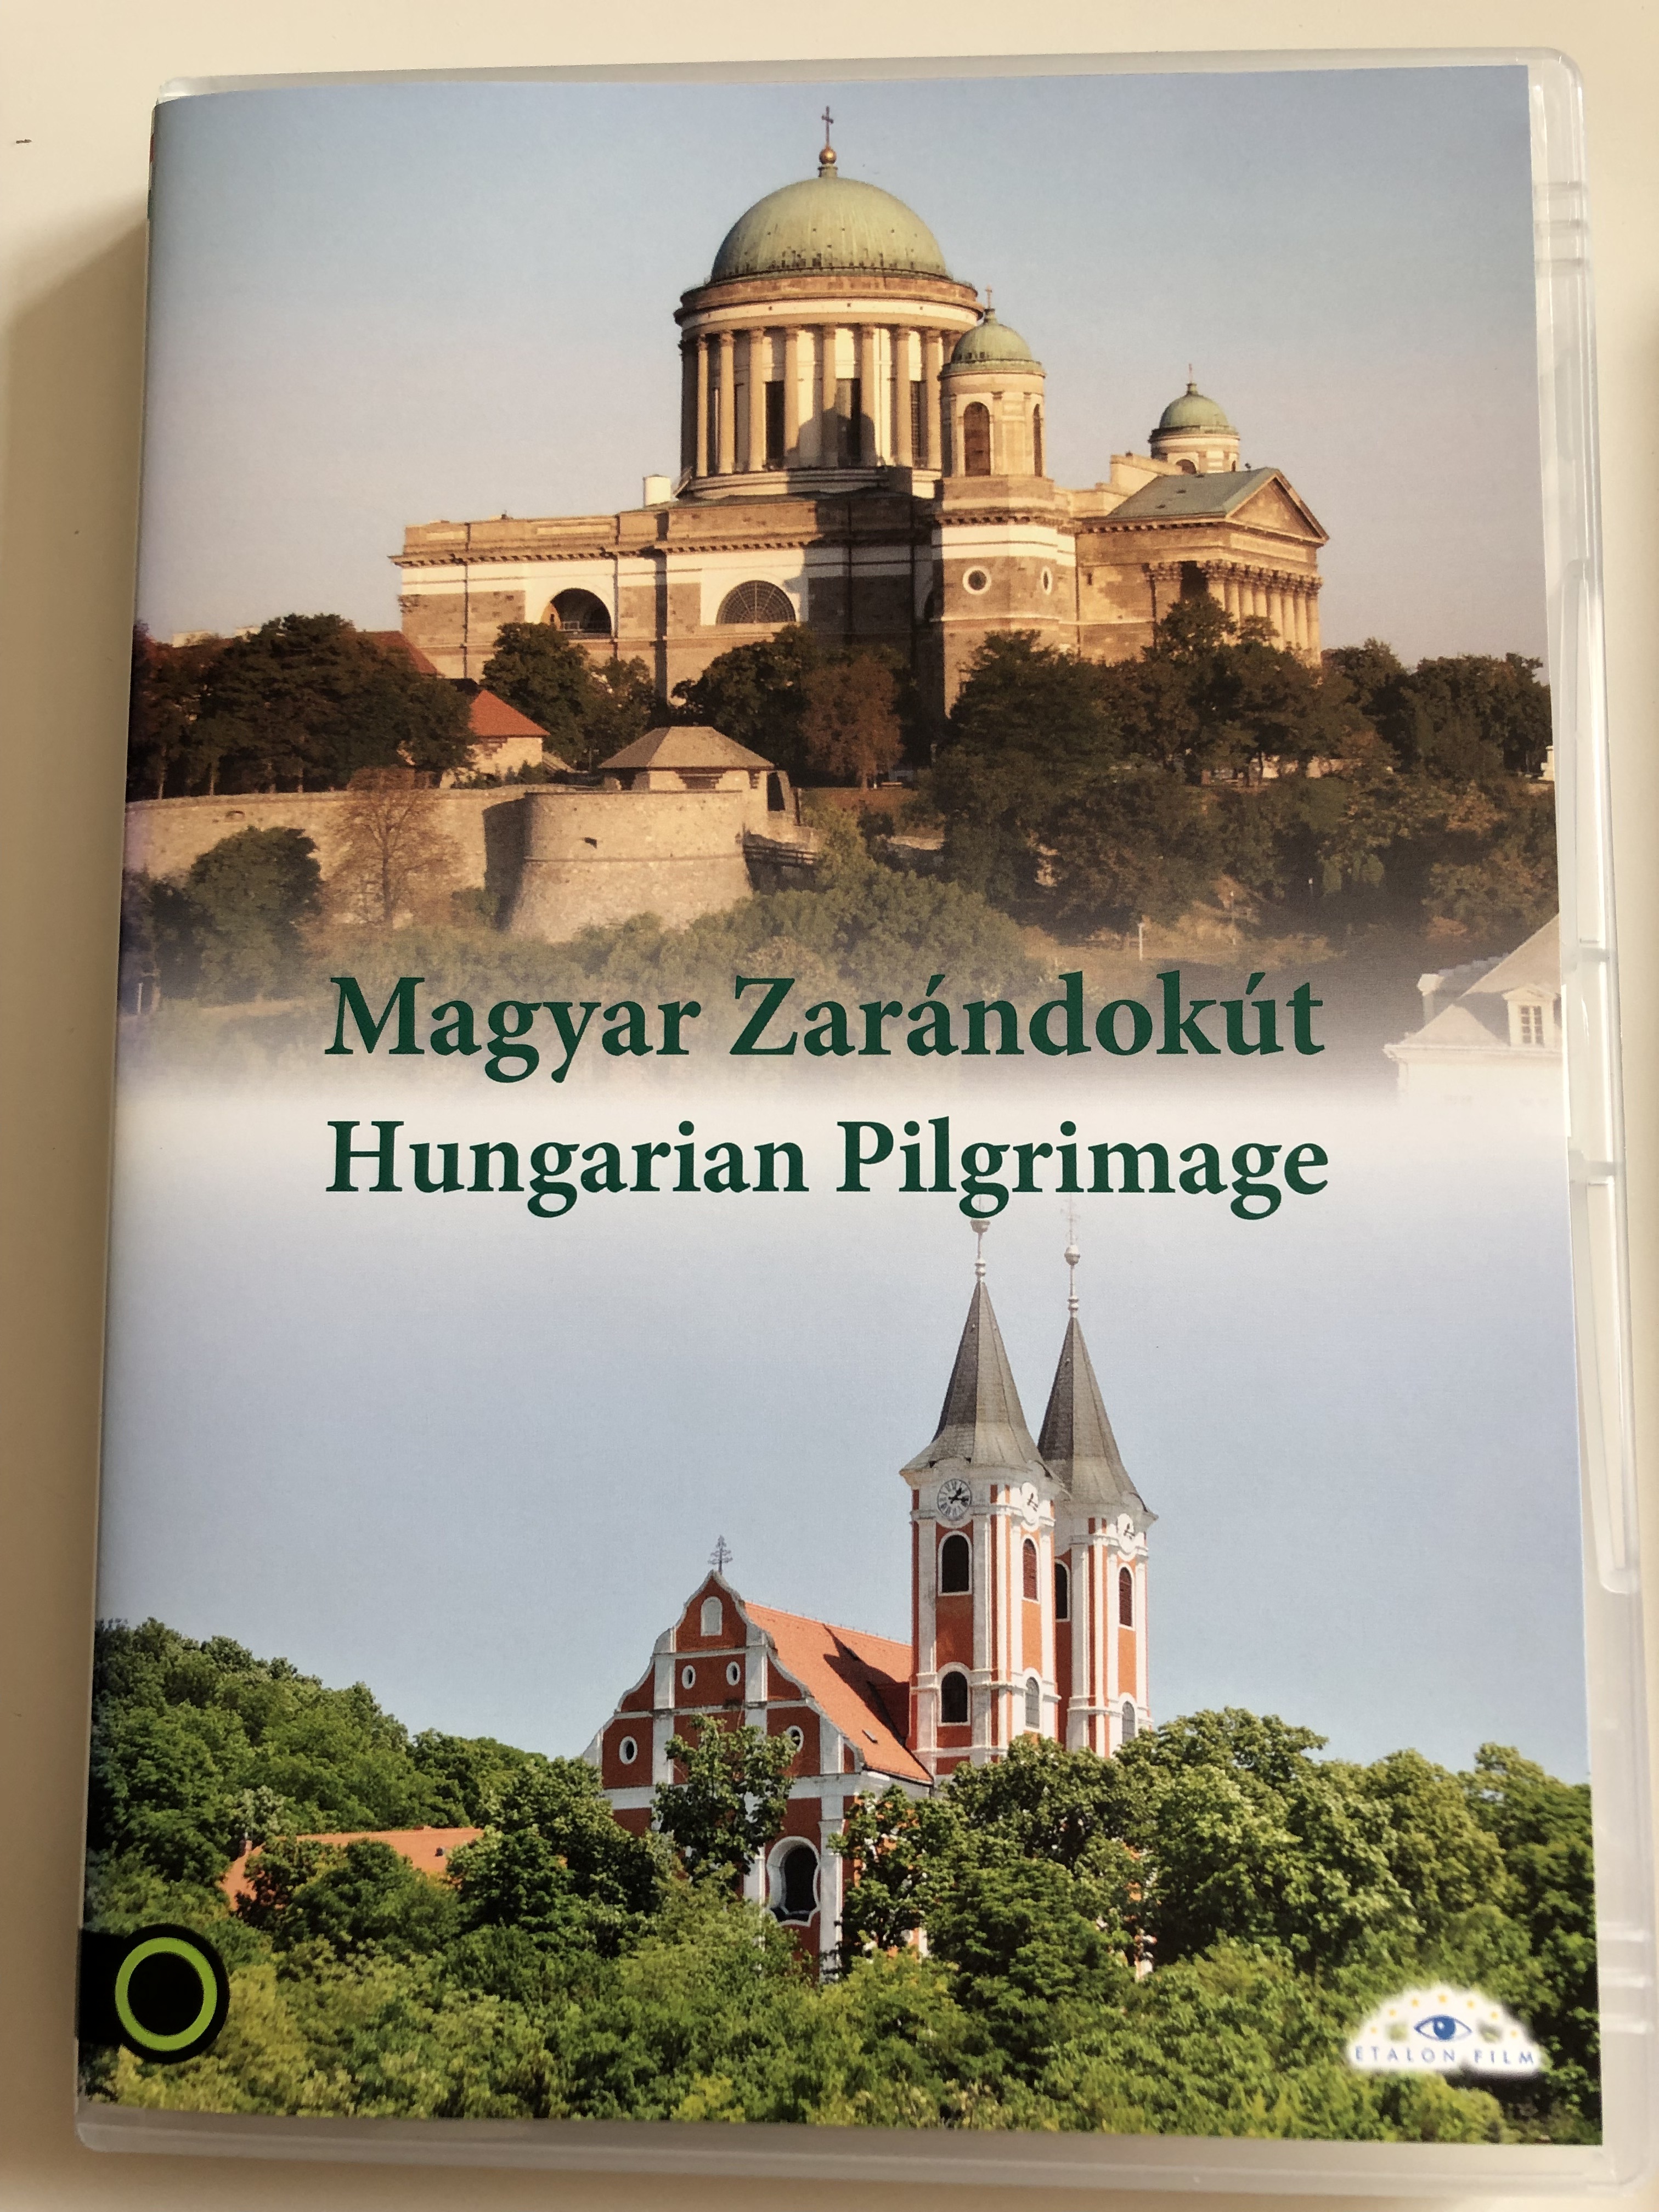 magyar-zar-ndok-t-dvd-2014-hungarian-pilgrimage-directed-by-v-r-s-tam-s-narrators-p-sztor-edina-csehi-andr-s-etalon-film-1-.jpg